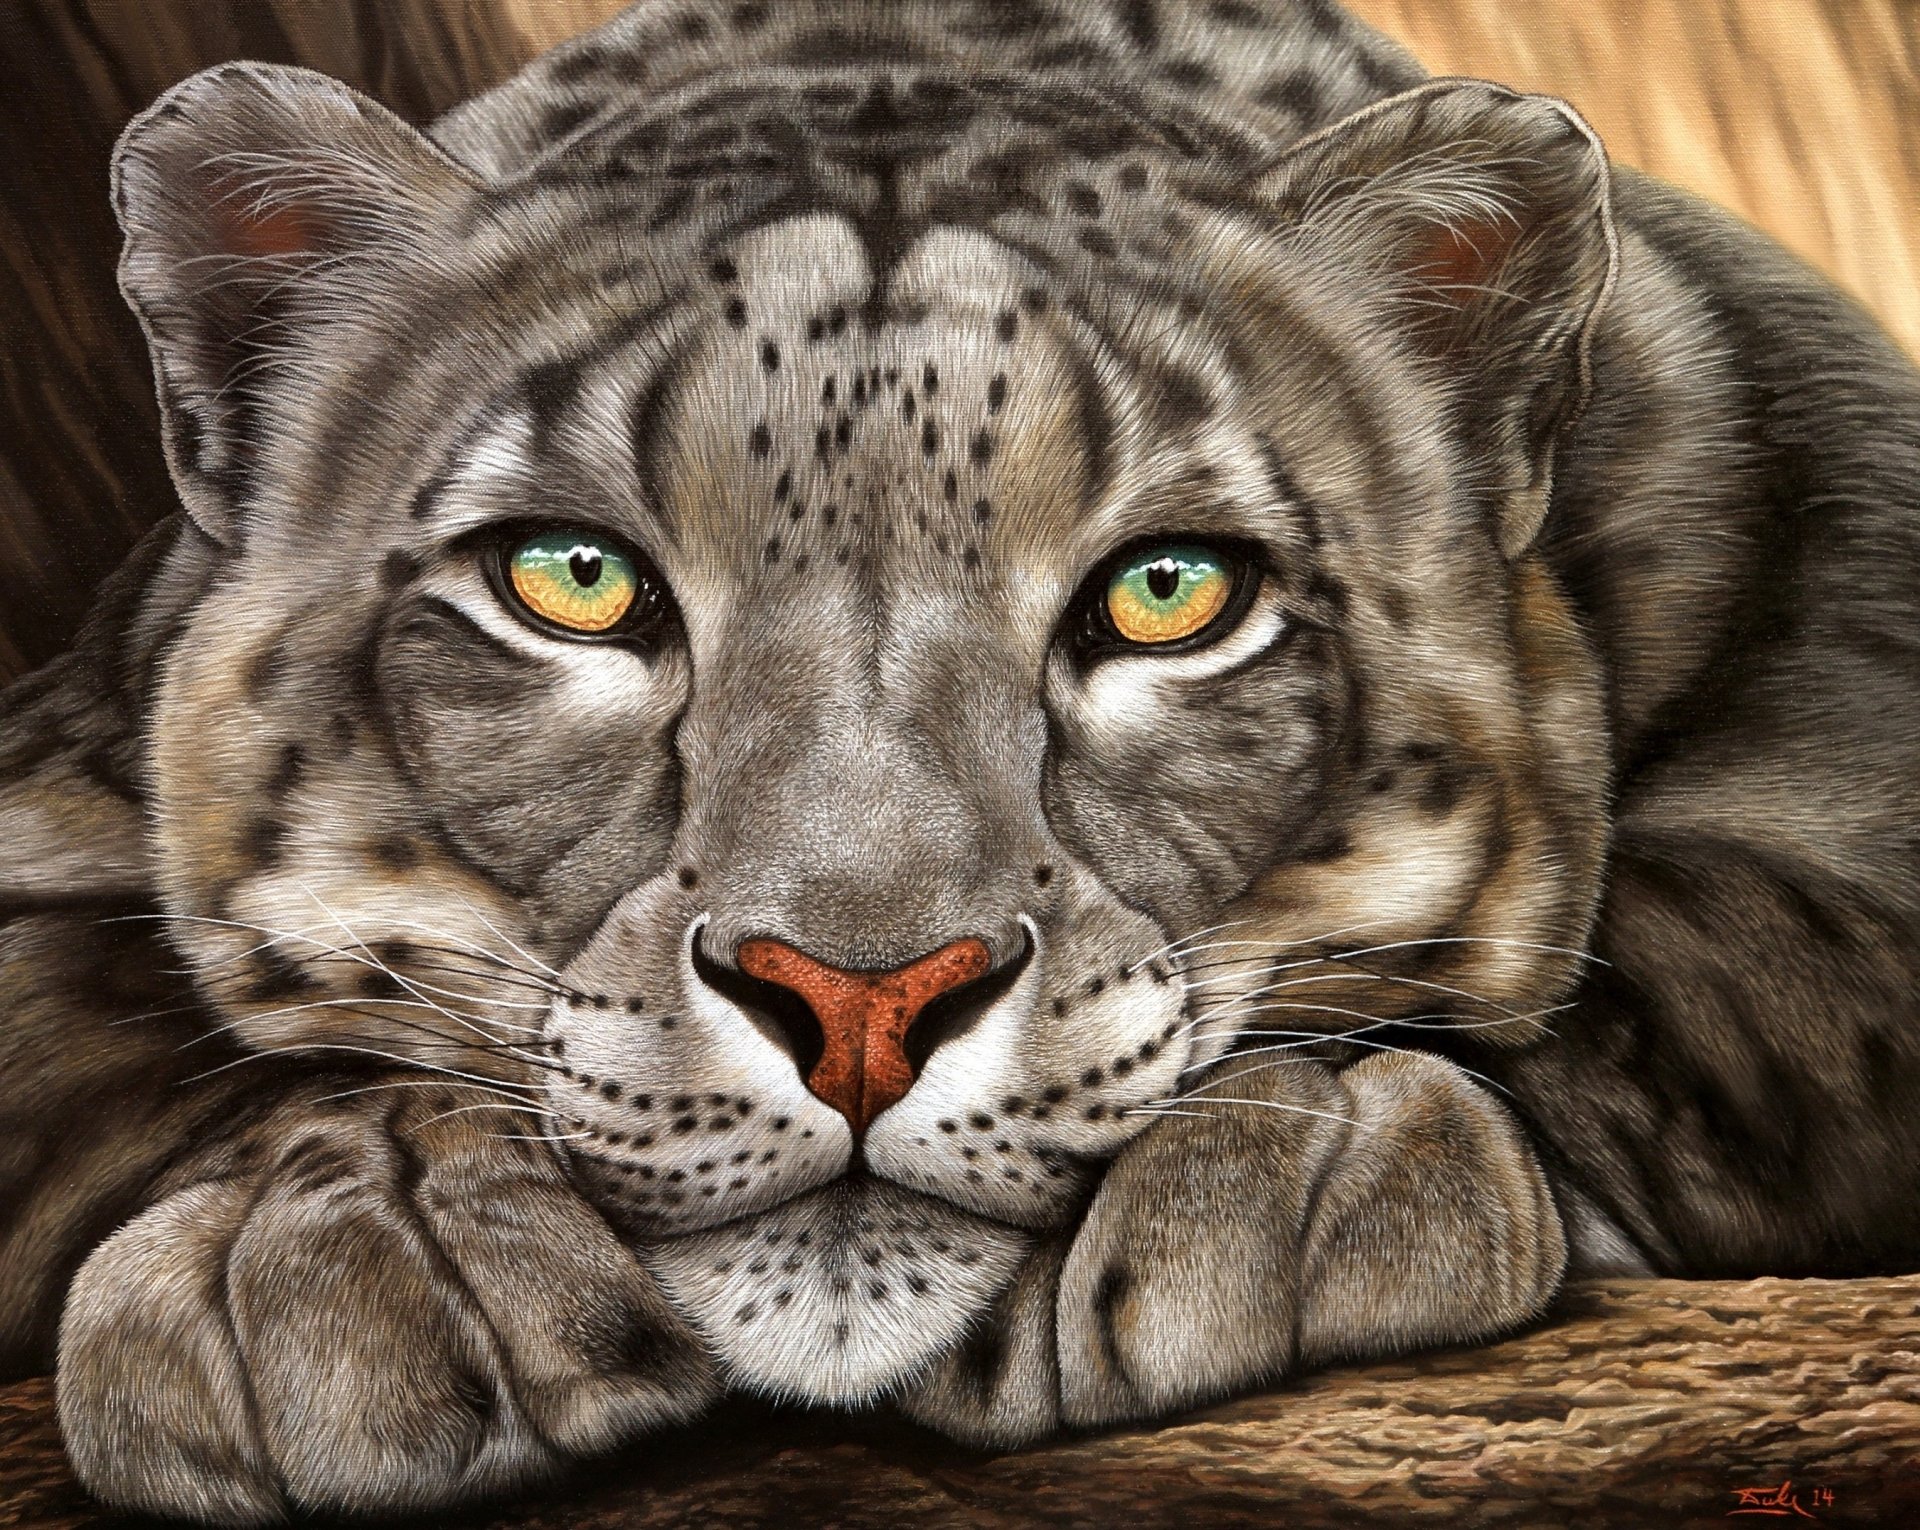 Snow Leopard Hd Wallpaper